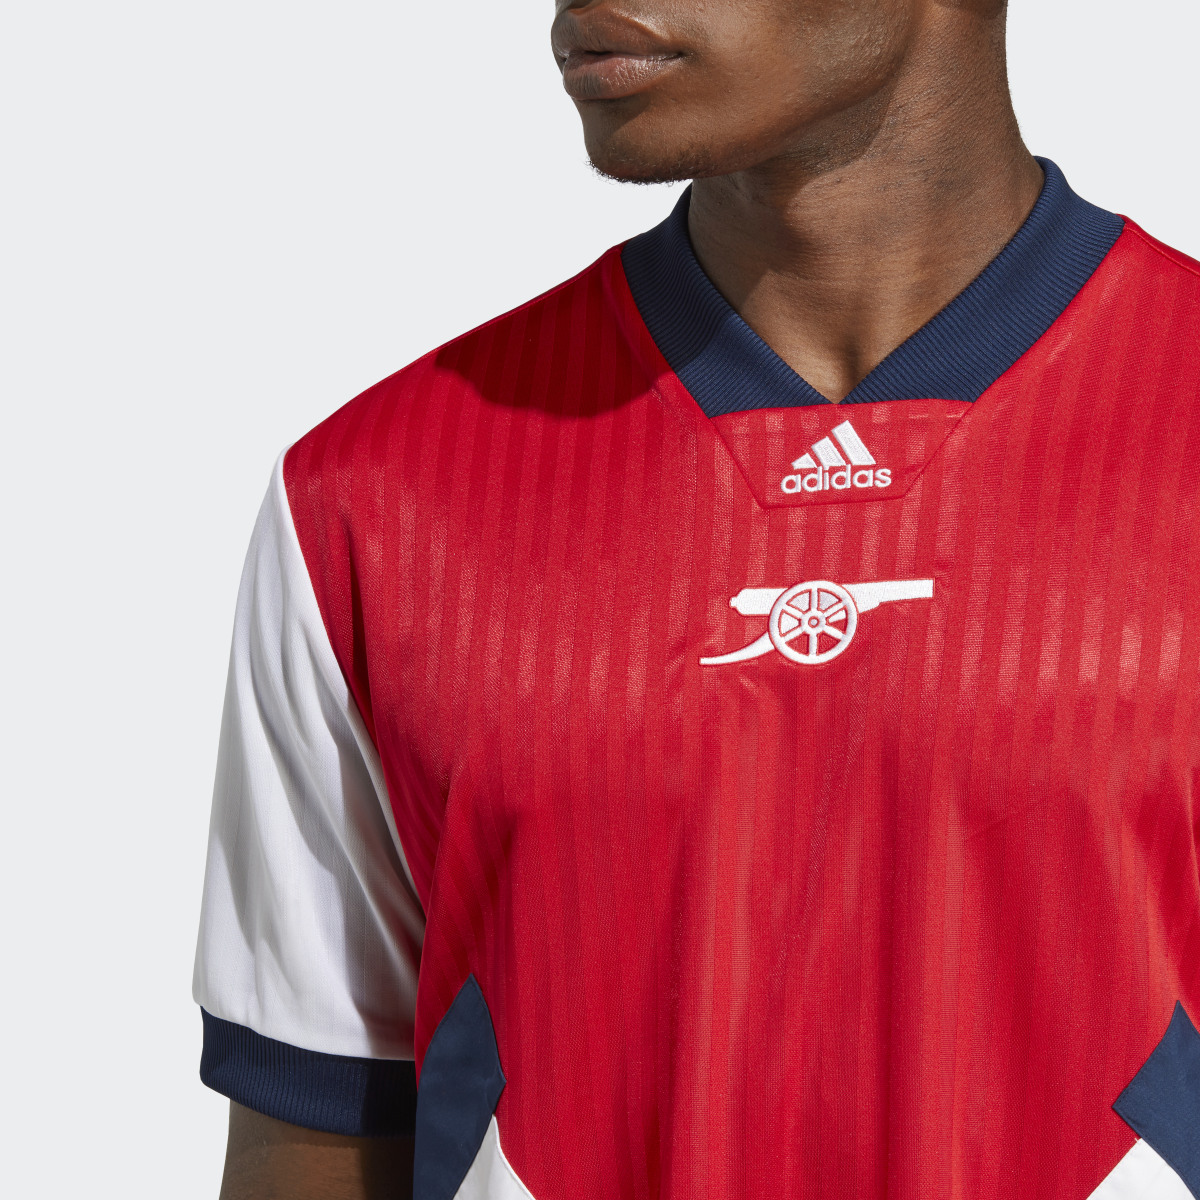 Adidas Jersey Arsenal Icon. 8